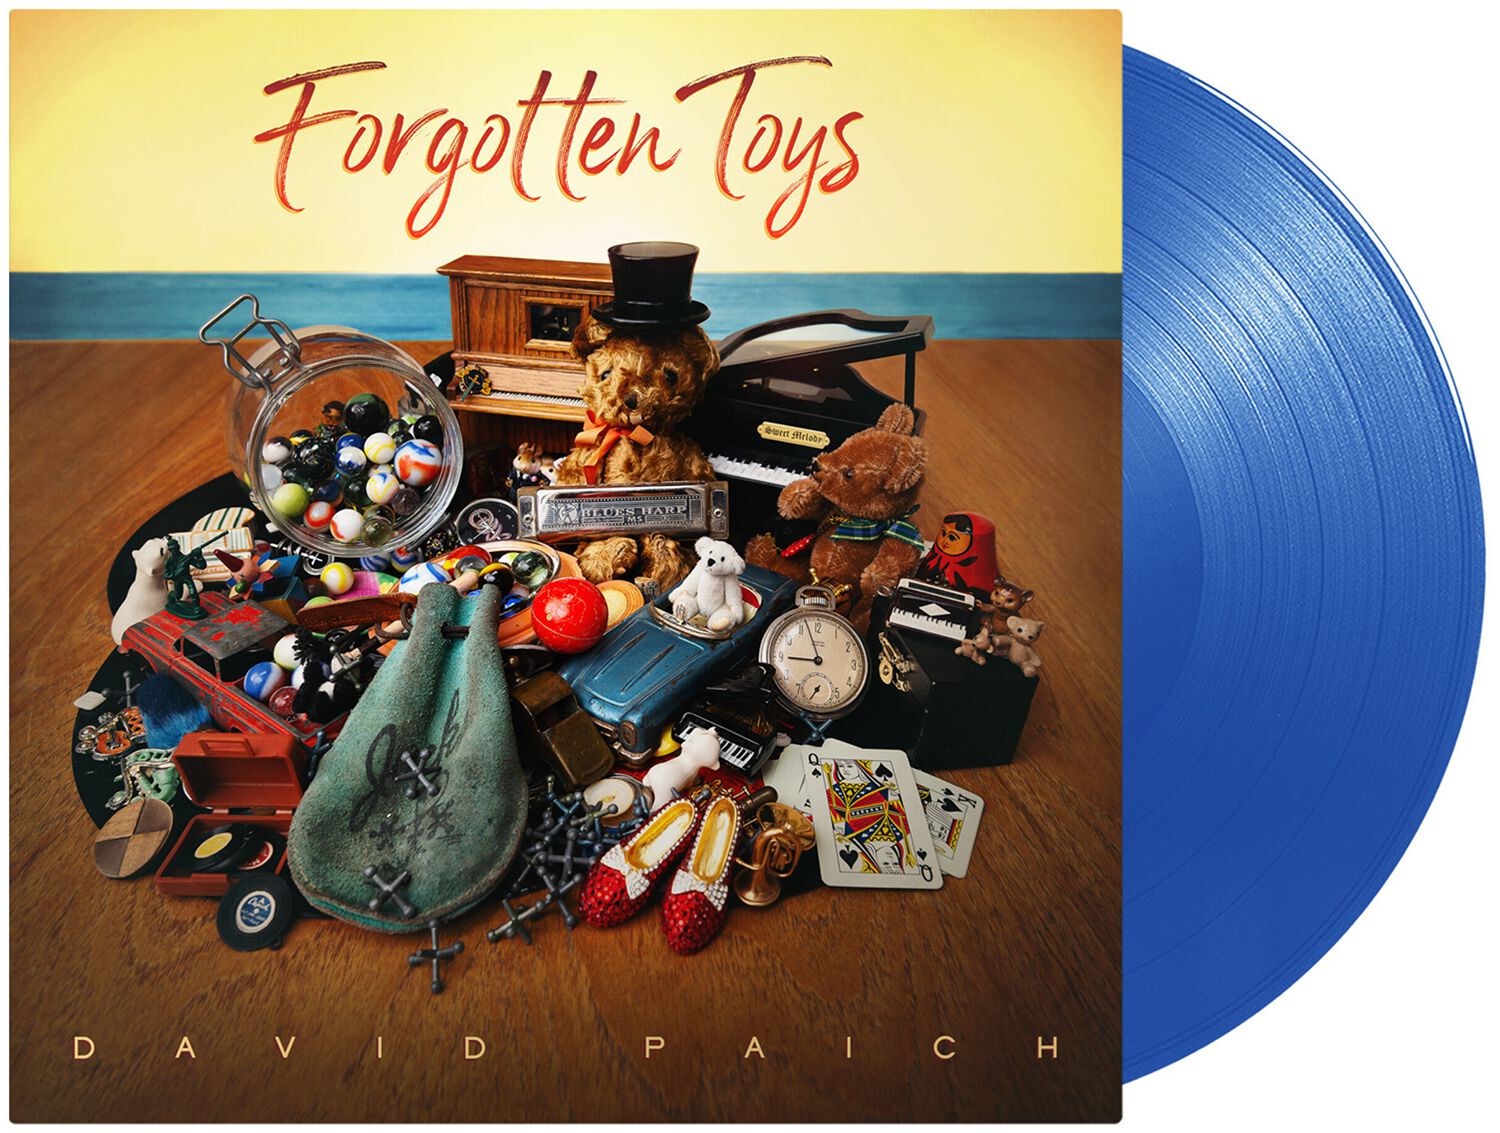 David Paich Forgotten toys LP blue